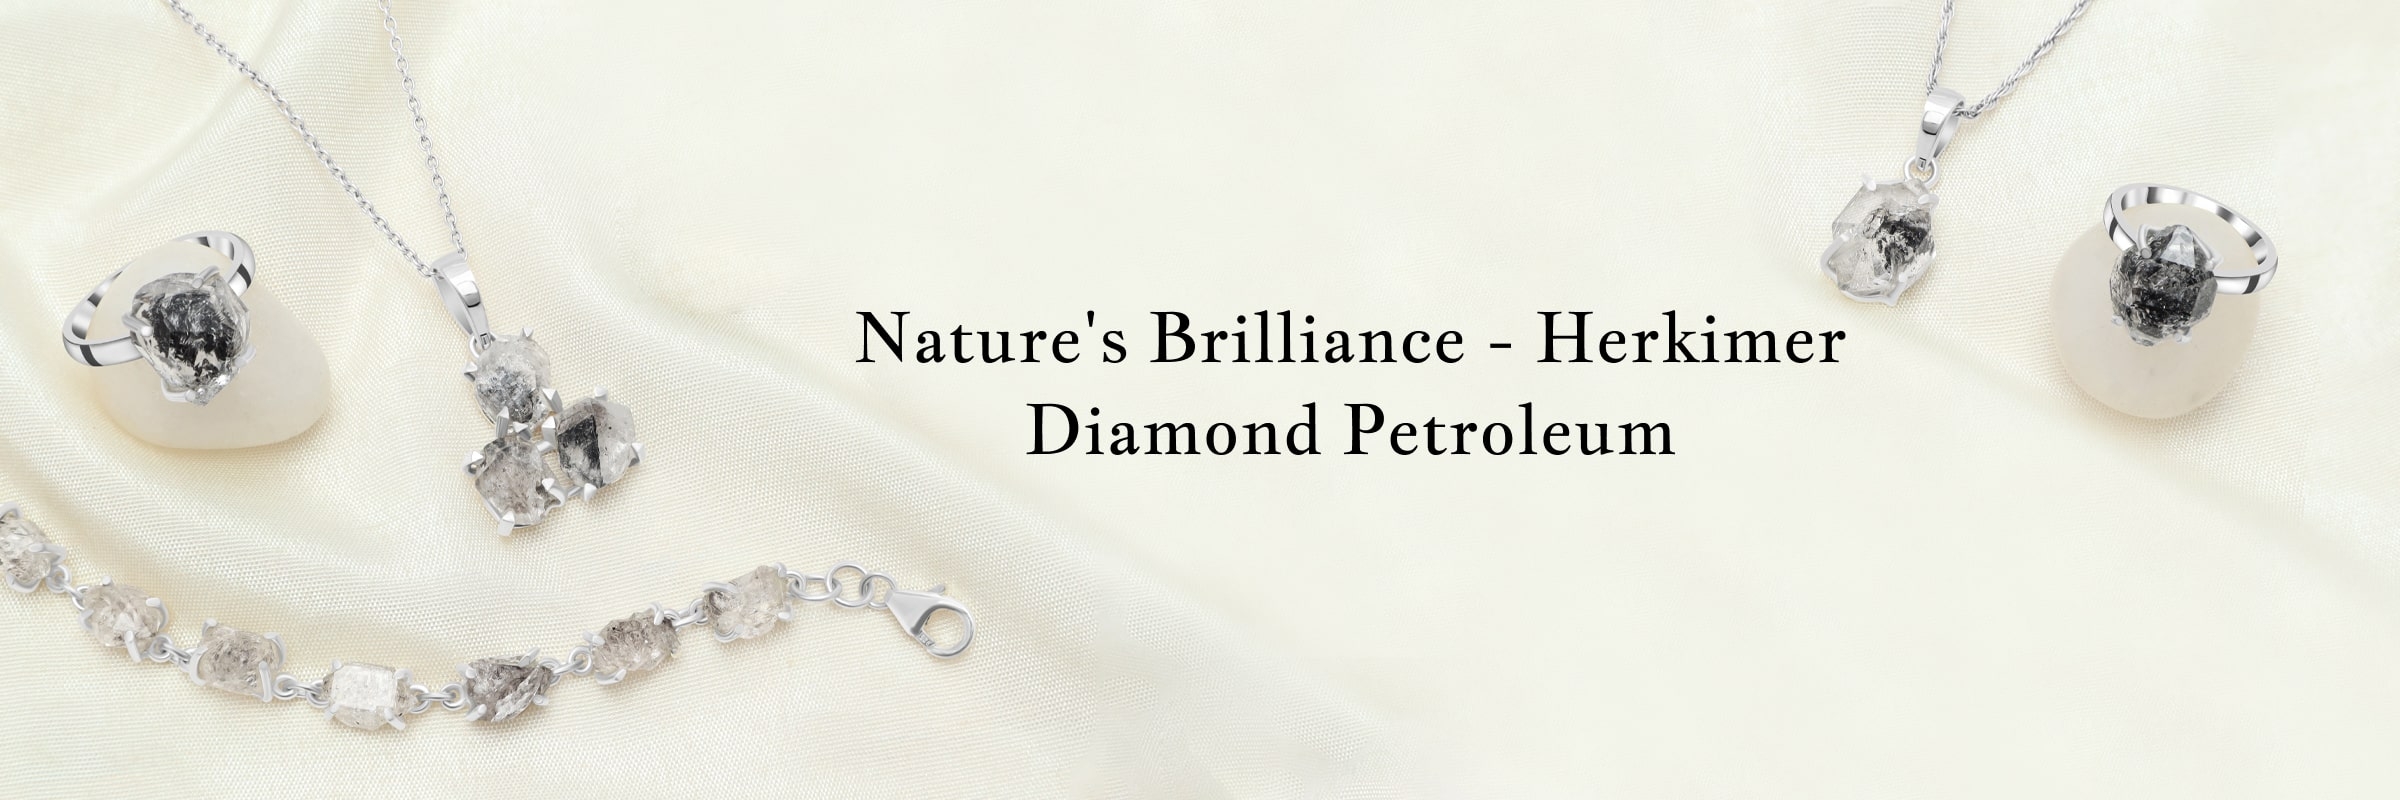 Herkimer Diamond Petroleum